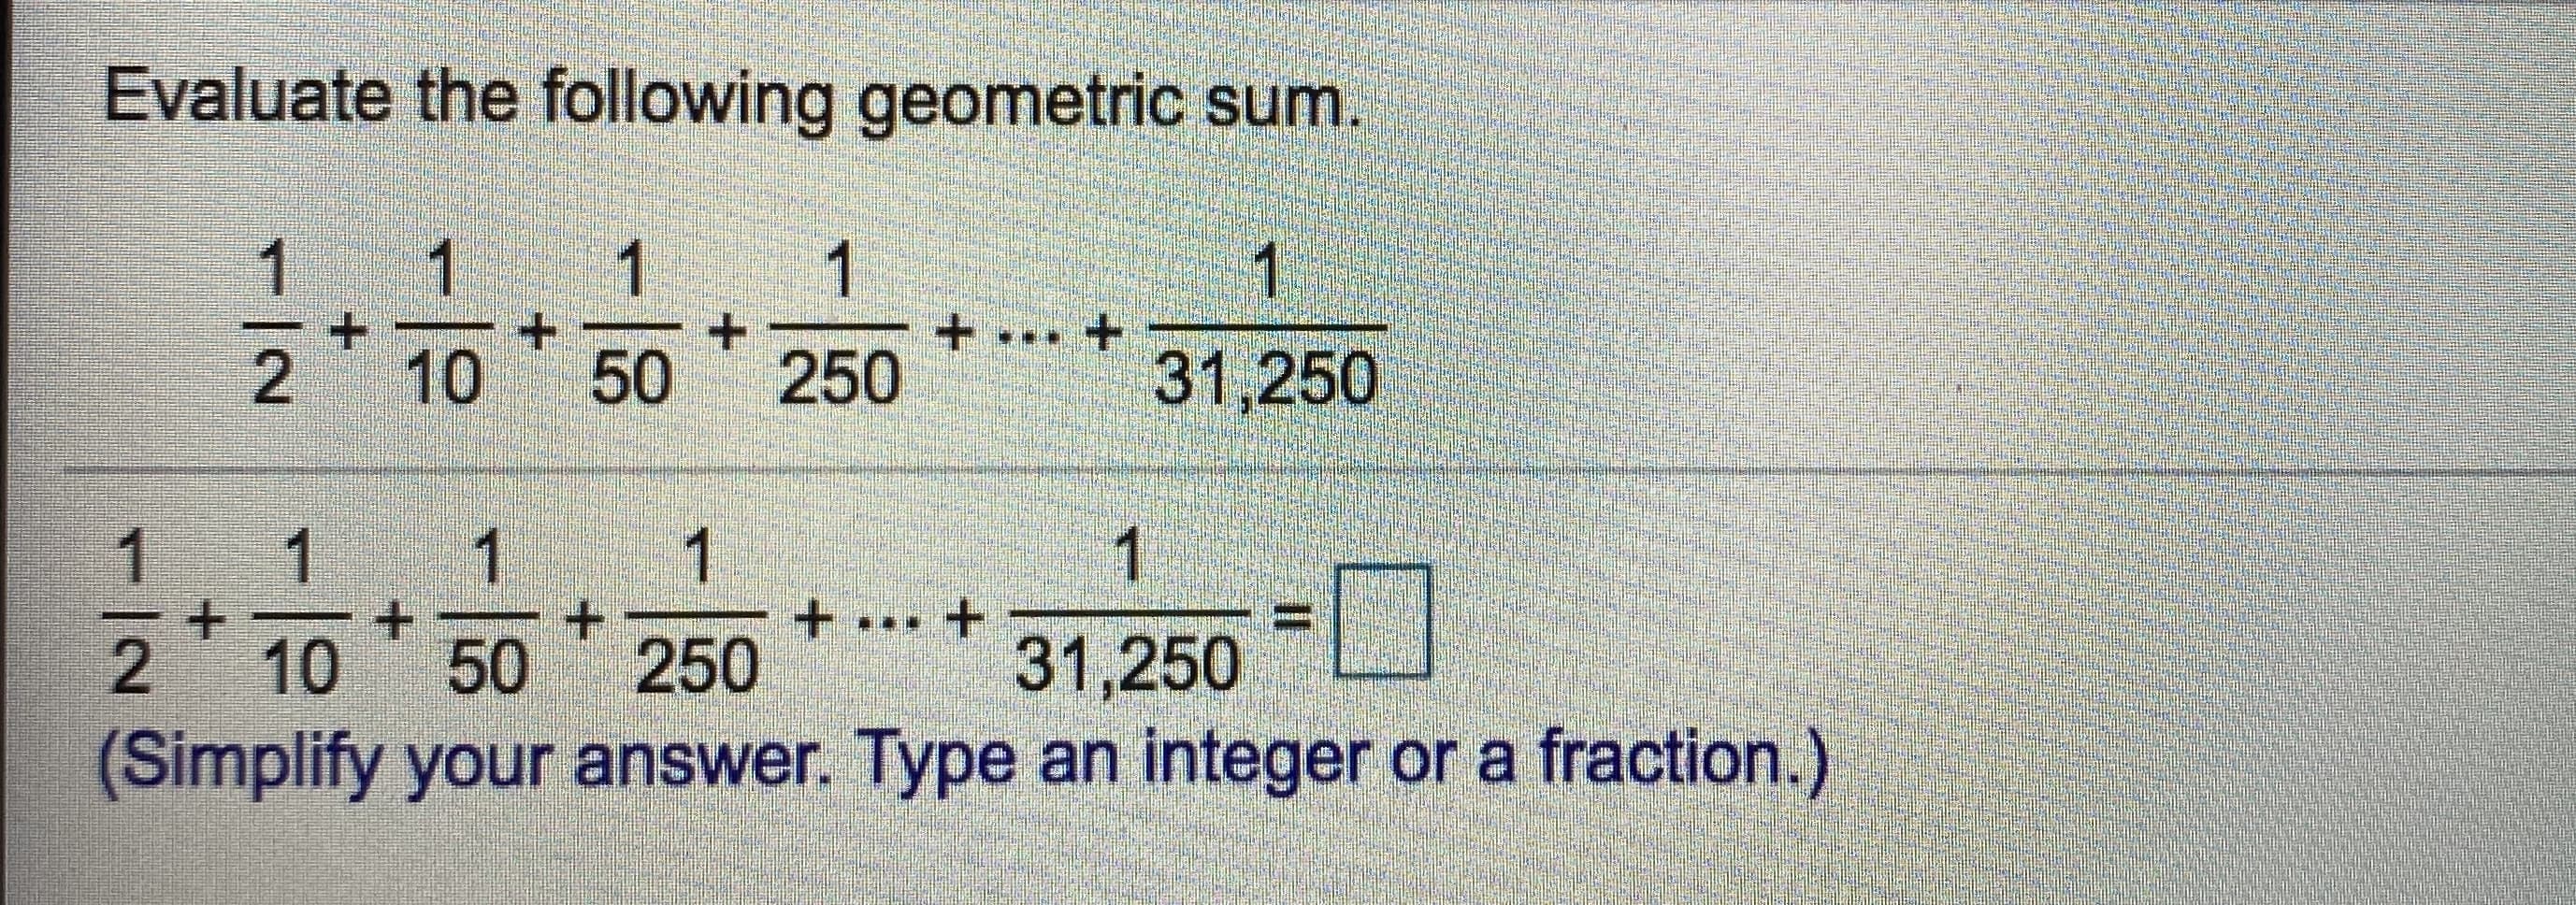 Evaluate the following geometric sum.
1
1
+ ... +
31,250
1
1
1
10 50 250
r/2
